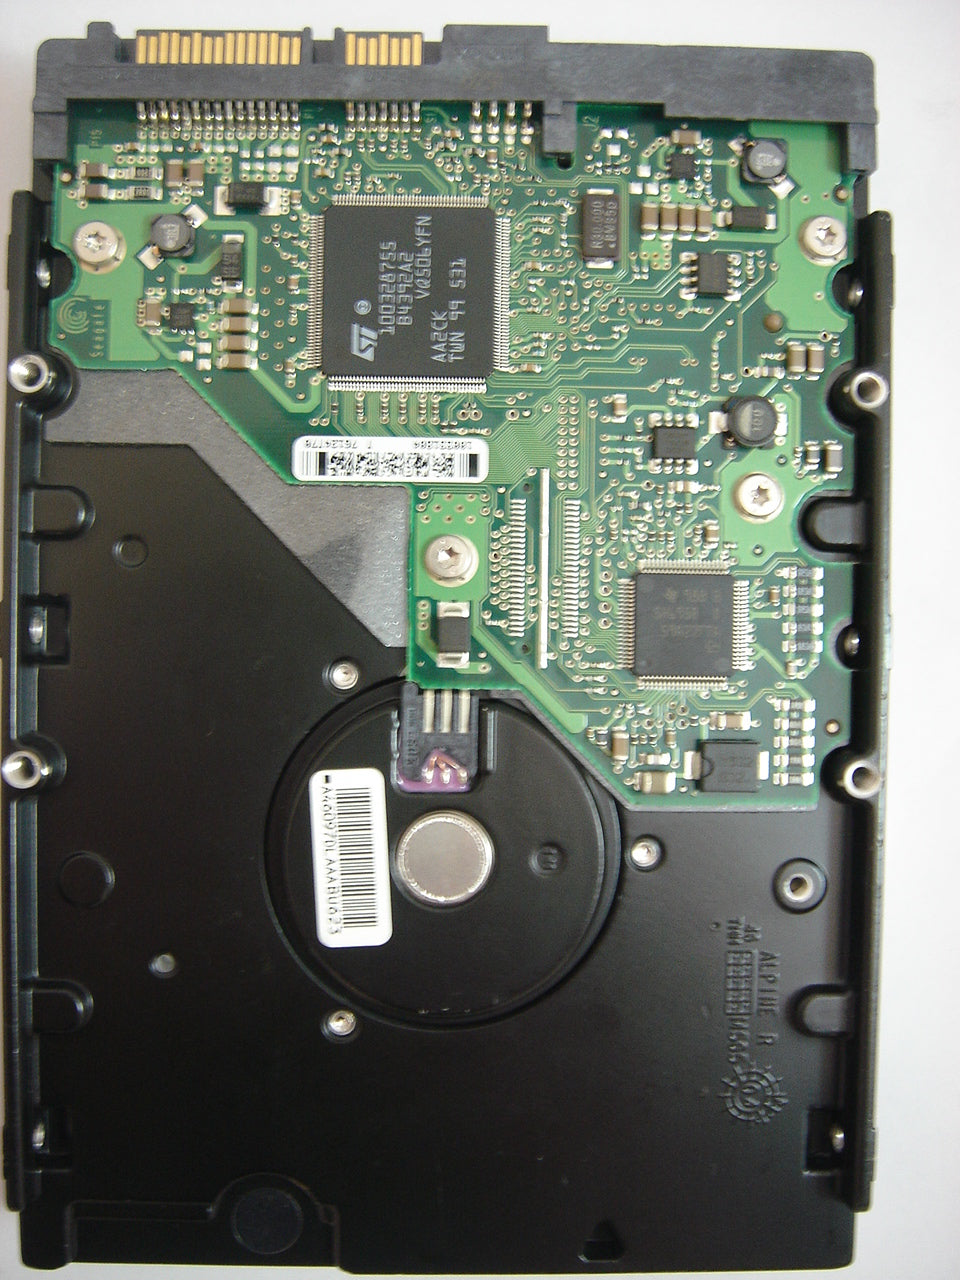 9W2015-276 - Seagate IBM 40GB SATA 7200rpm 3.5in Barracuda 7200.7 HDD - Refurbished